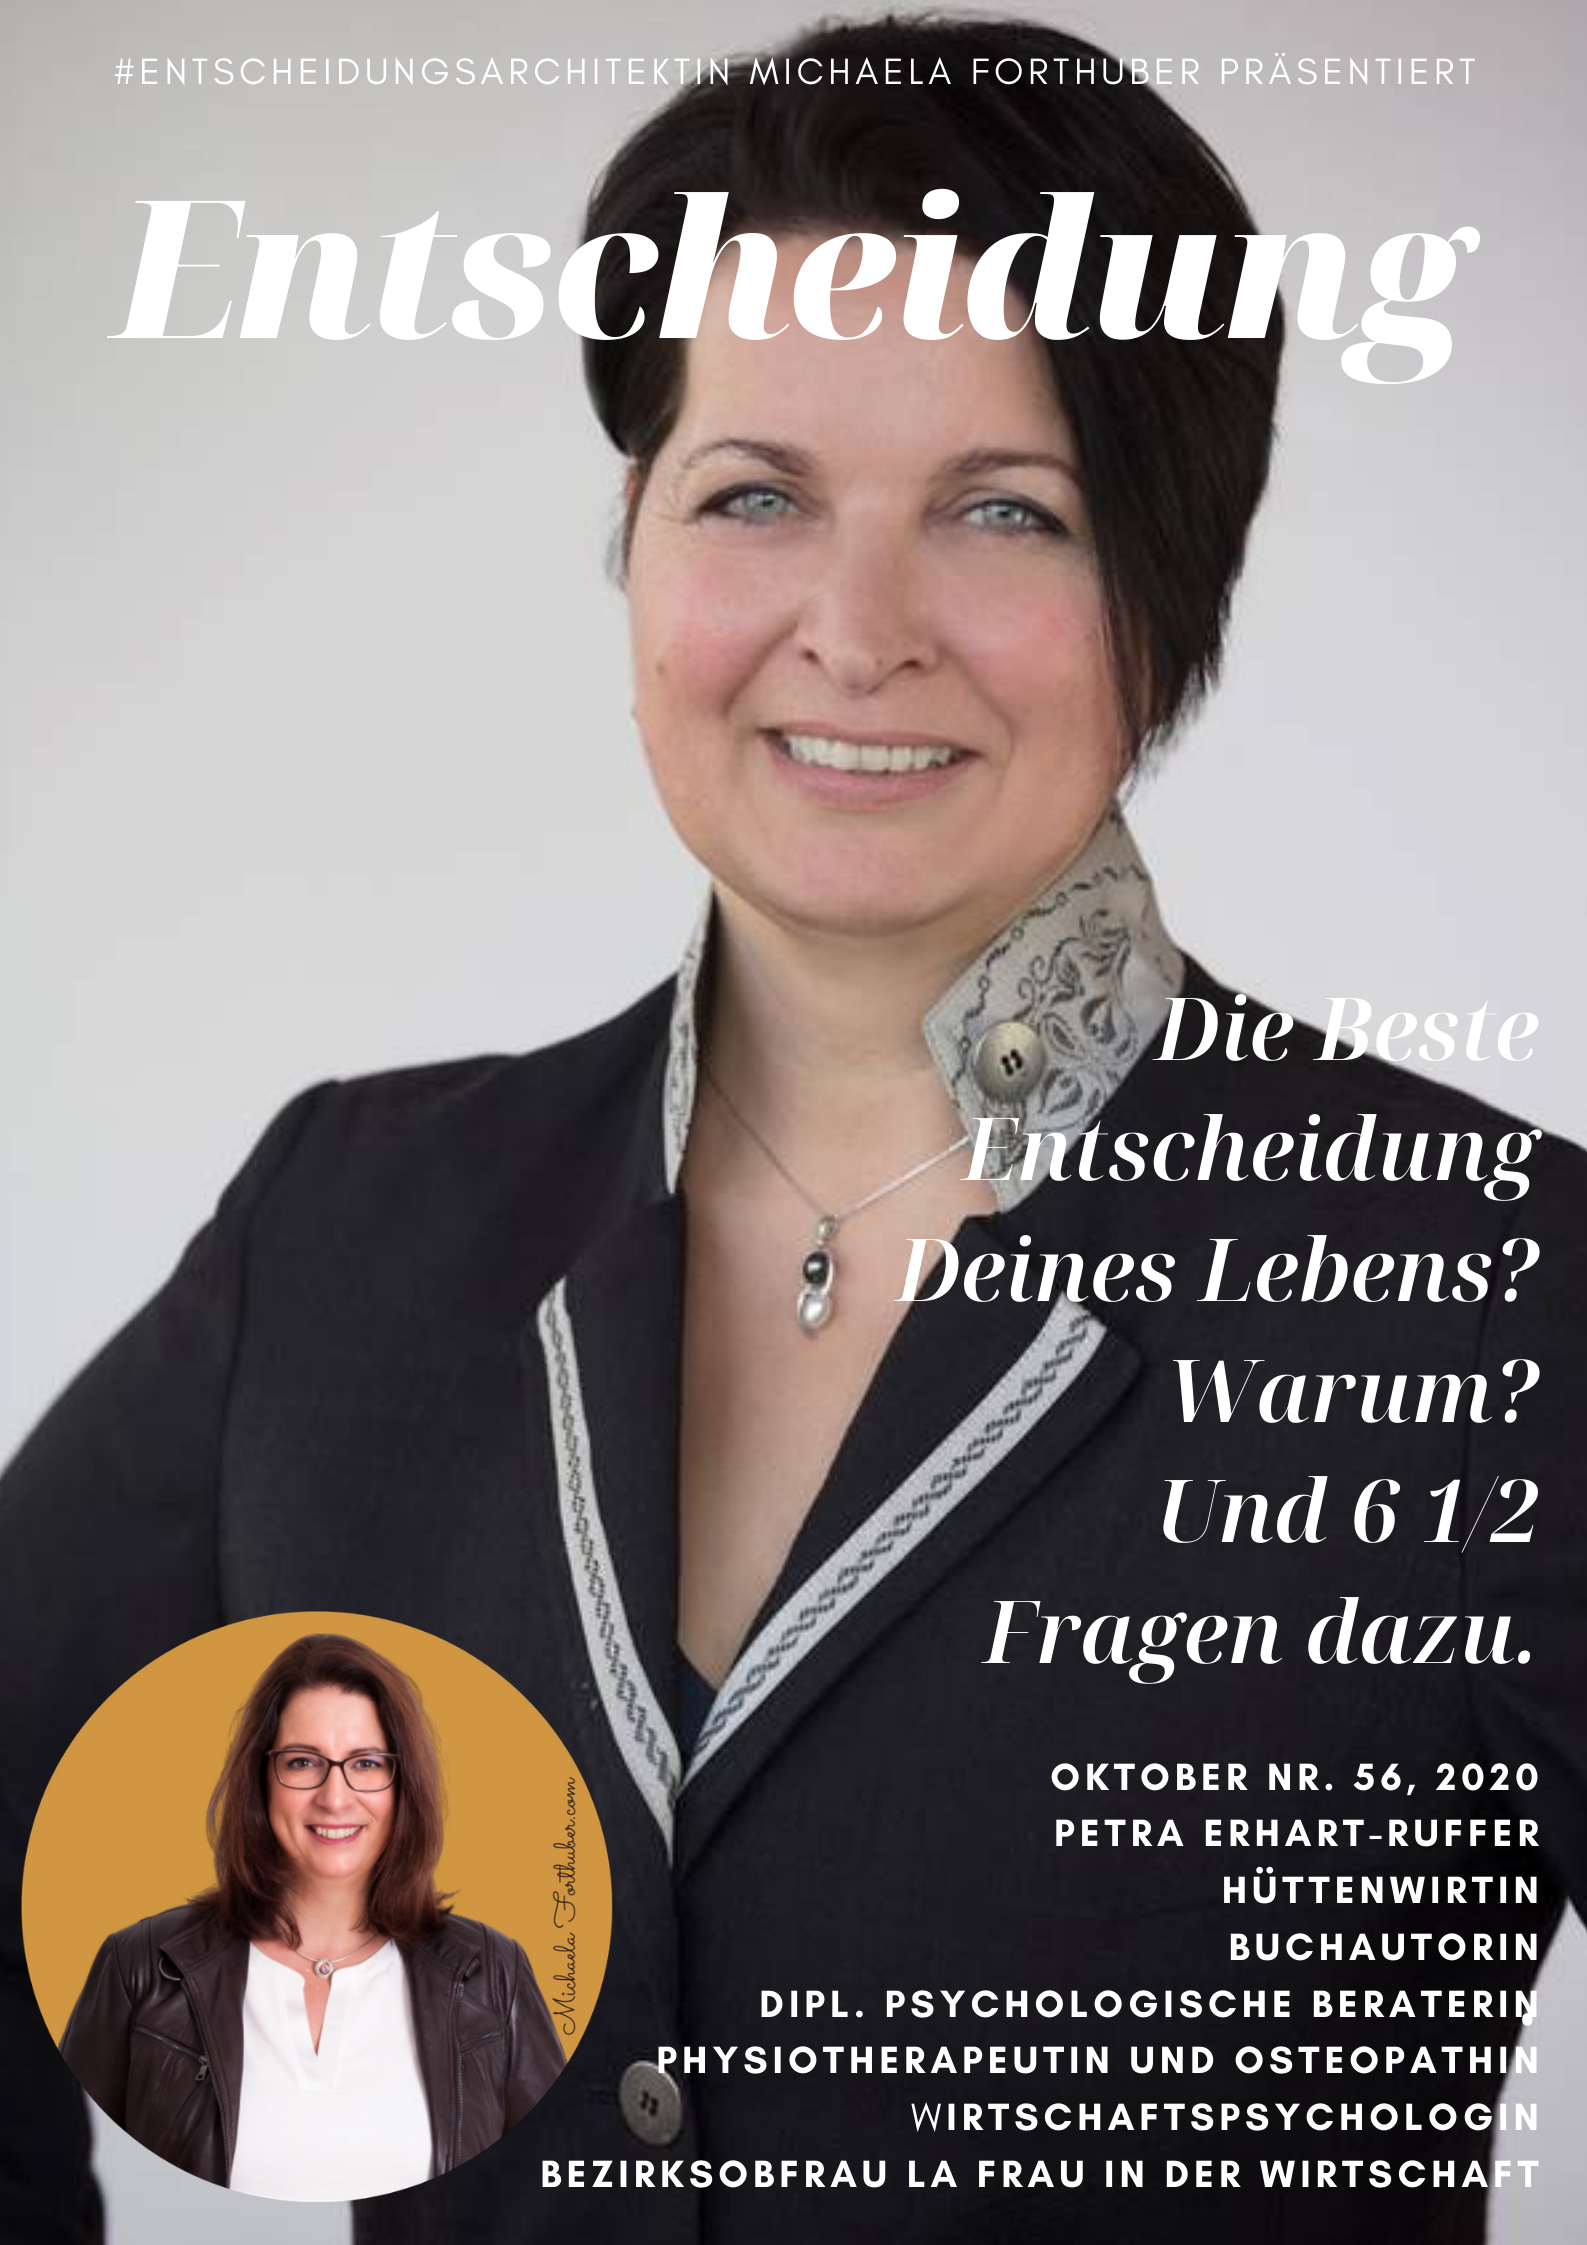 Blog Interview Entscheiden Cover Michaela Forthuber #Entscheidungsarchitektin mit Petra Erhart-Ruffer